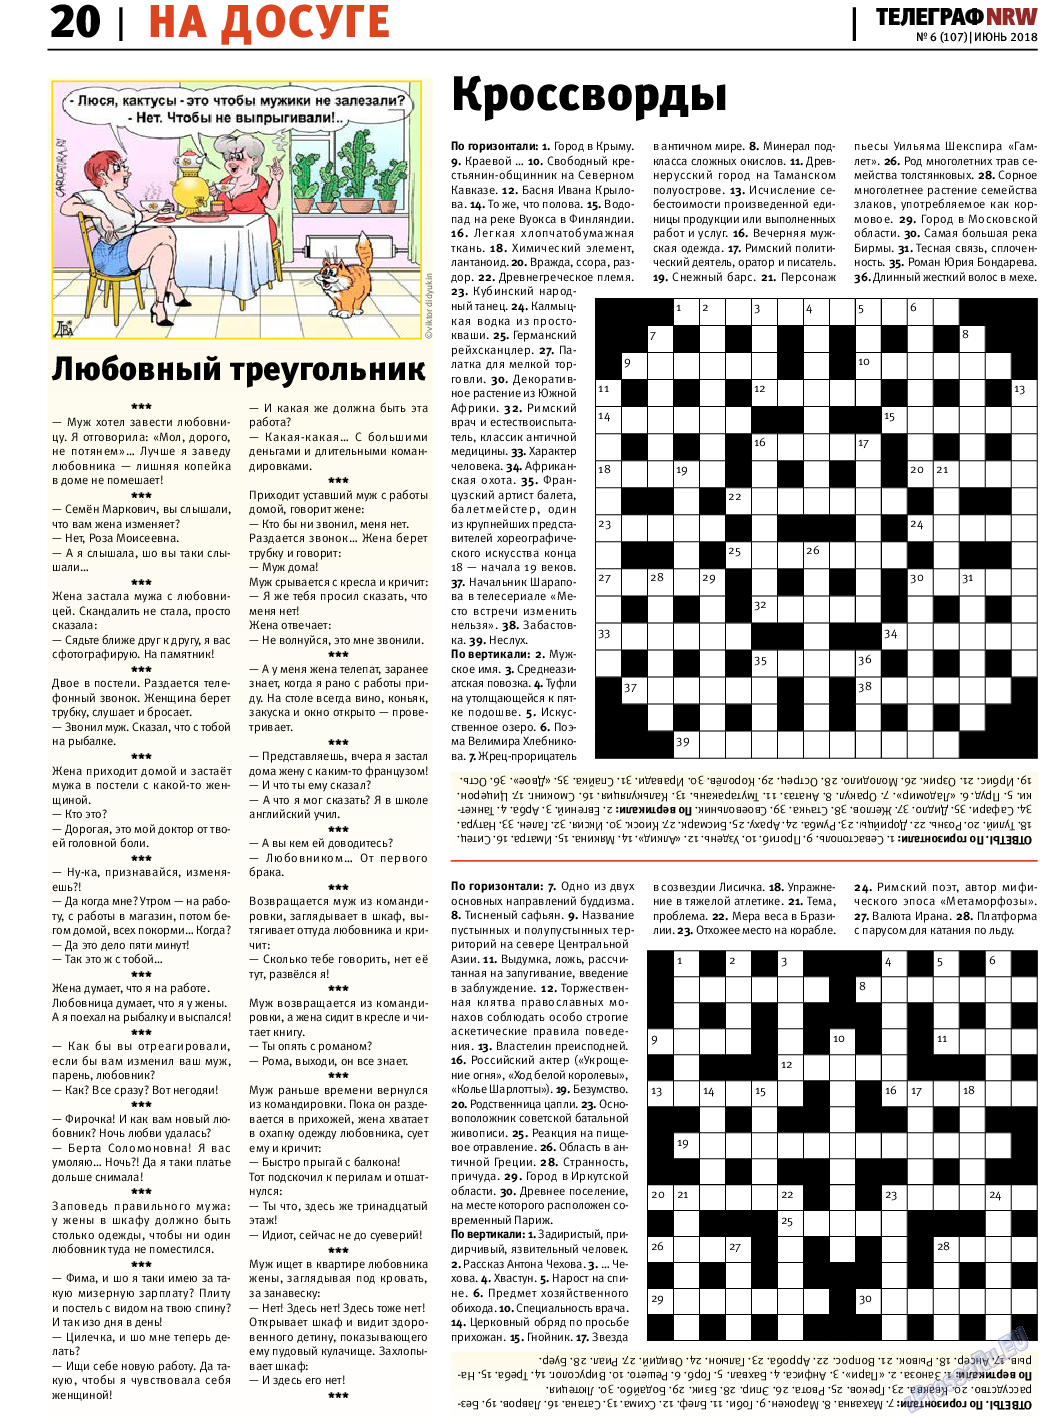 Телеграф NRW, газета. 2018 №6 стр.20